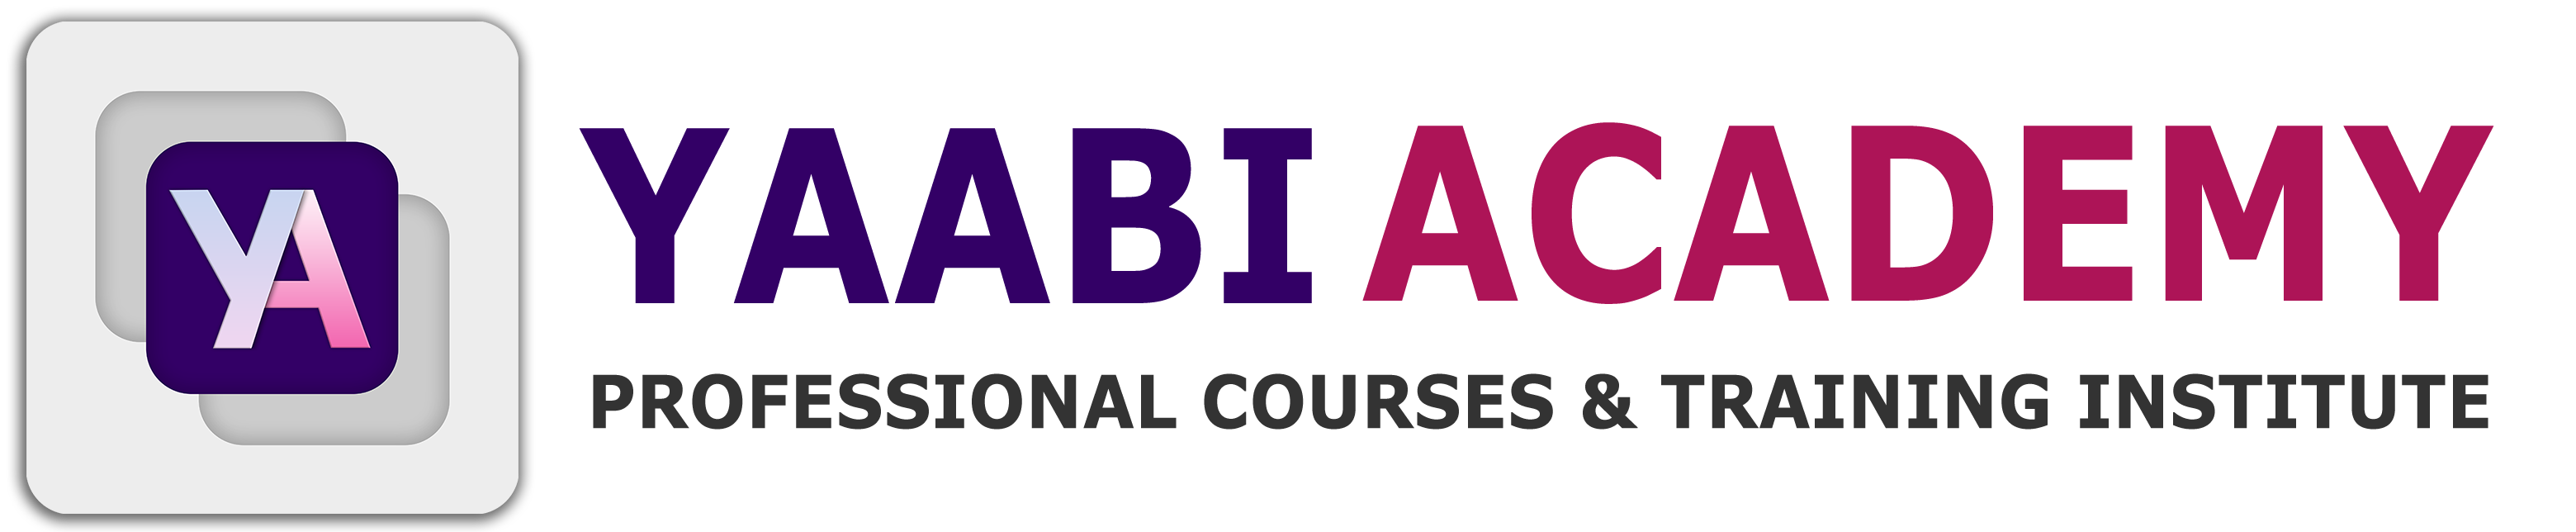 yaabi-academy-logo-with-text